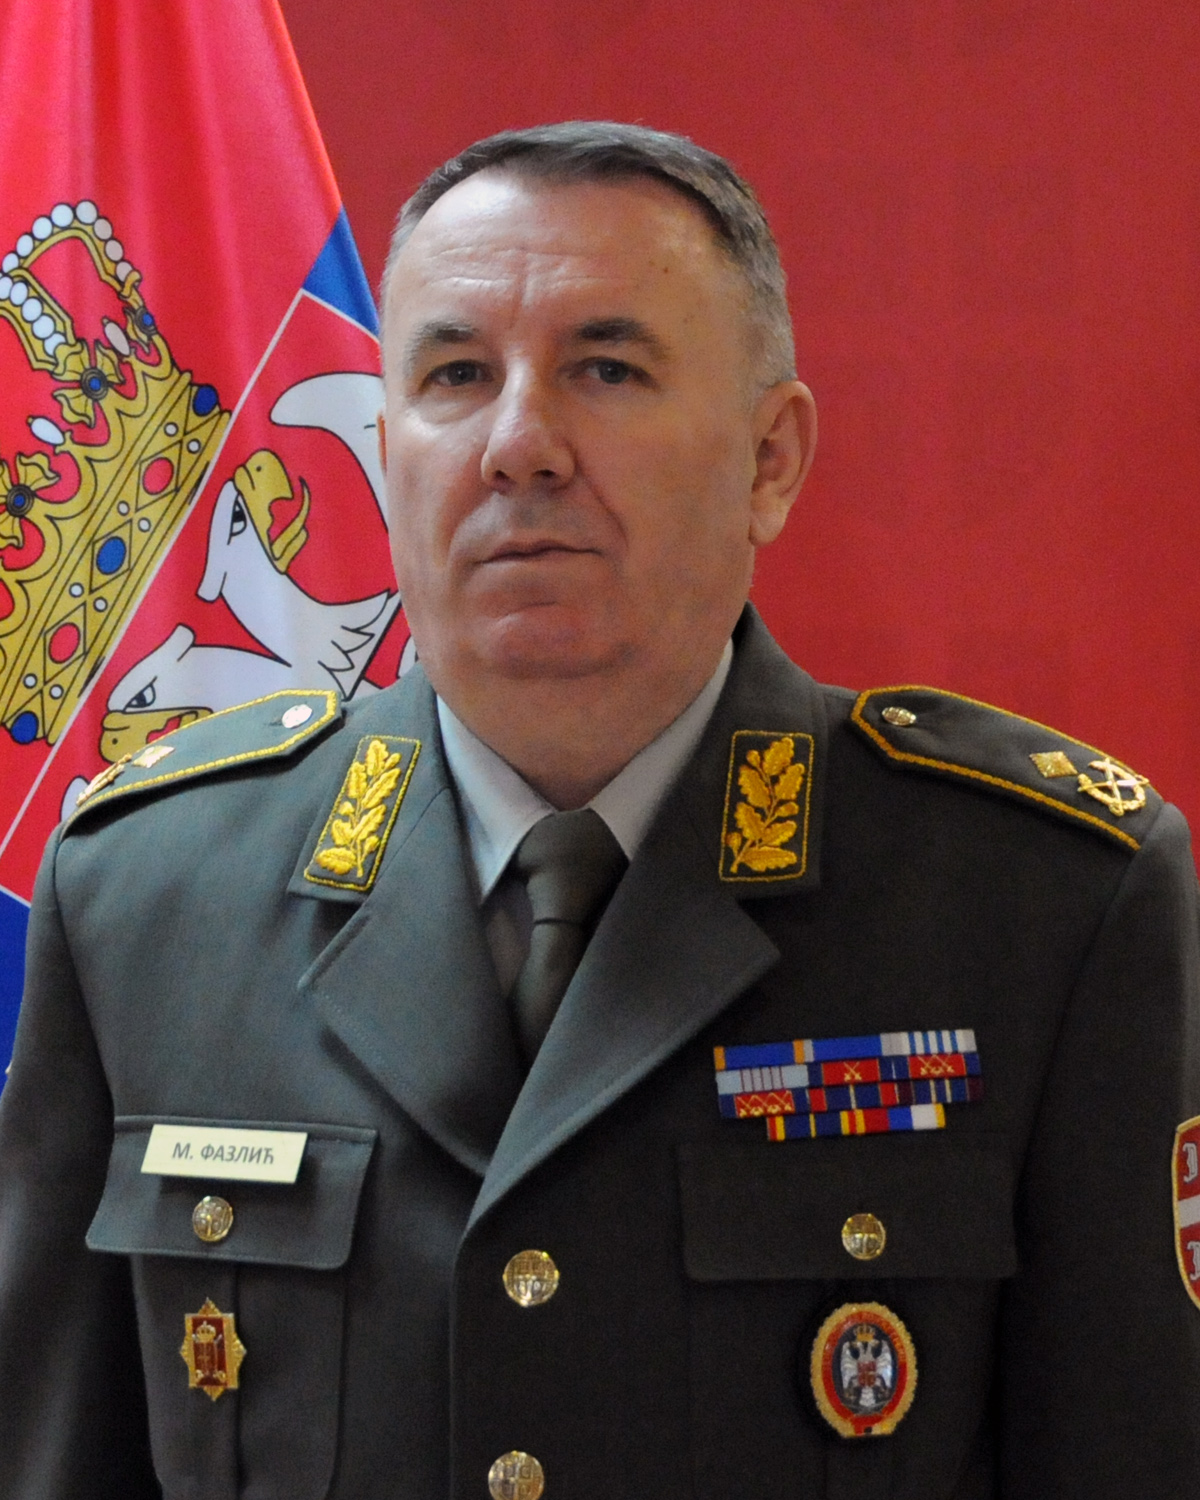 Brigadier General Muharem Fazlić